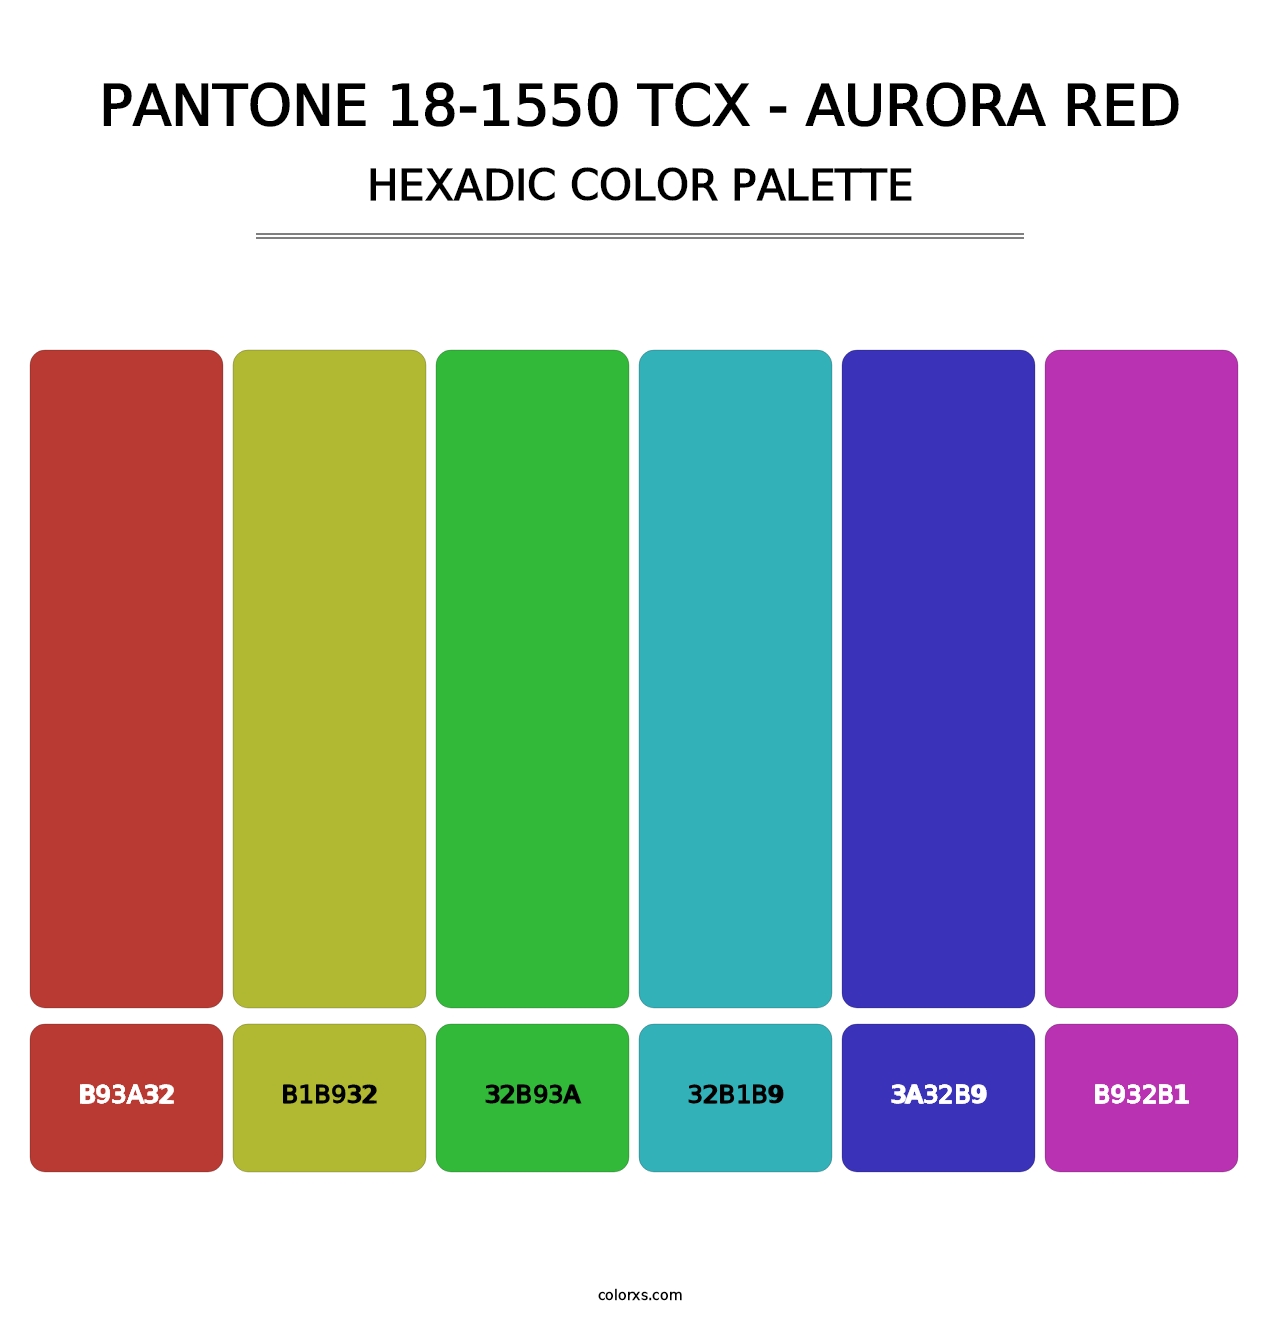 PANTONE 18-1550 TCX - Aurora Red - Hexadic Color Palette